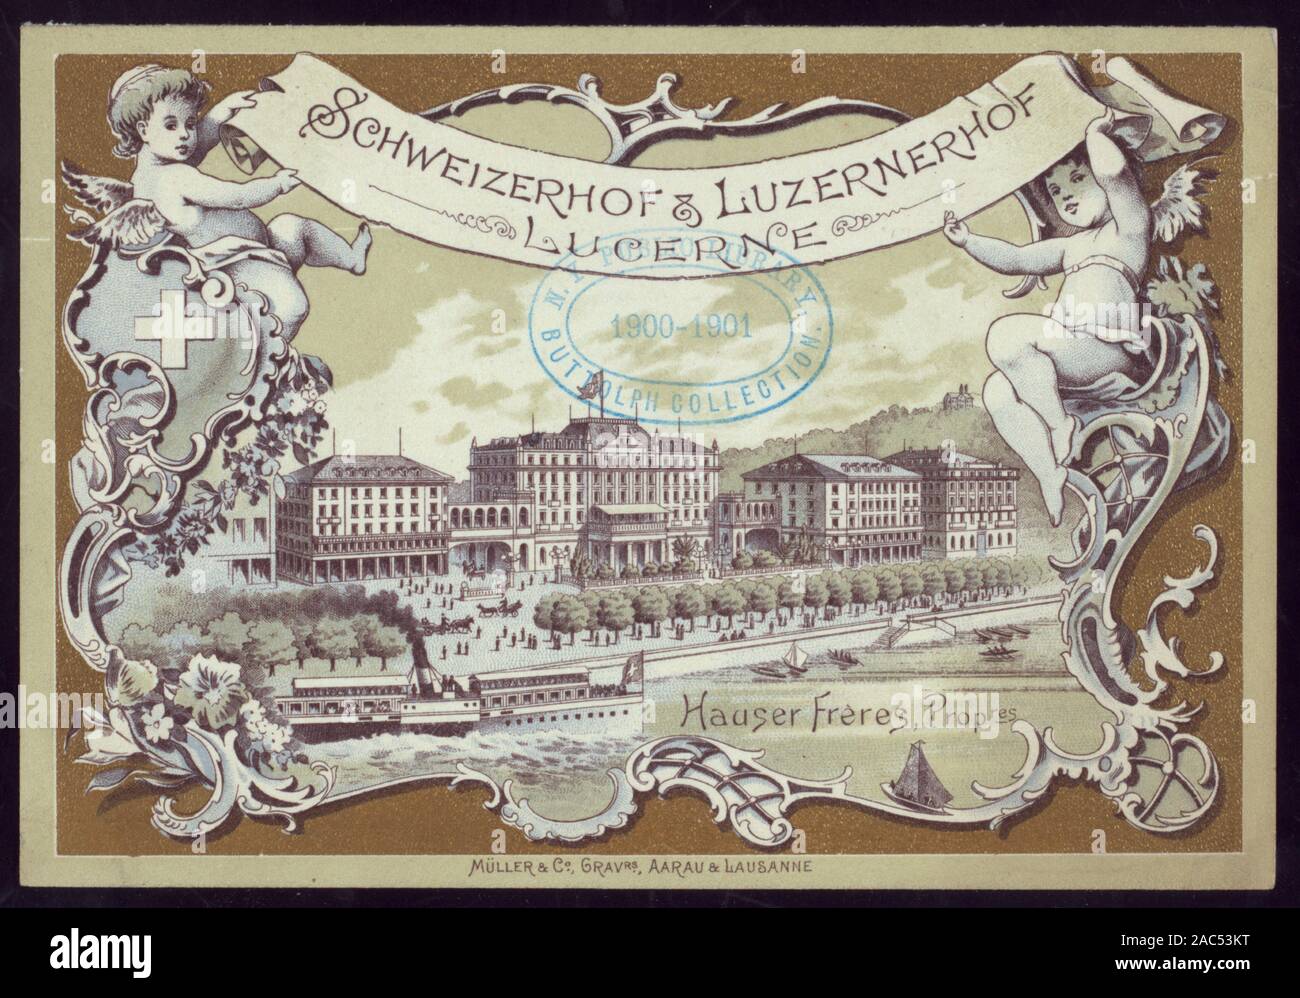 HOCHZEITESSEN VON HERRN RECHTSANWALT MAX GUTTMANN UND FRAULEIN BERTHA LENPOLD (detenute da) SCHWEIZERHOF & LUZERNERHOF (a) Luzern, Svizzera (caldo;) tedesco;COMPRENDE I vini serviti con ogni corso; illustrazioni di hotel, il lago di Lucerna e sulle alpi sui coperchi; HOCHZEITESSEN VON HERRN RECHTSANWALT MAX GUTTMANN UND FRAULEIN BERTHA LENPOLD [detenute da] SCHWEIZERHOF & LUZERNERHOF [at] Luzern, Svizzera (caldo;) Foto Stock